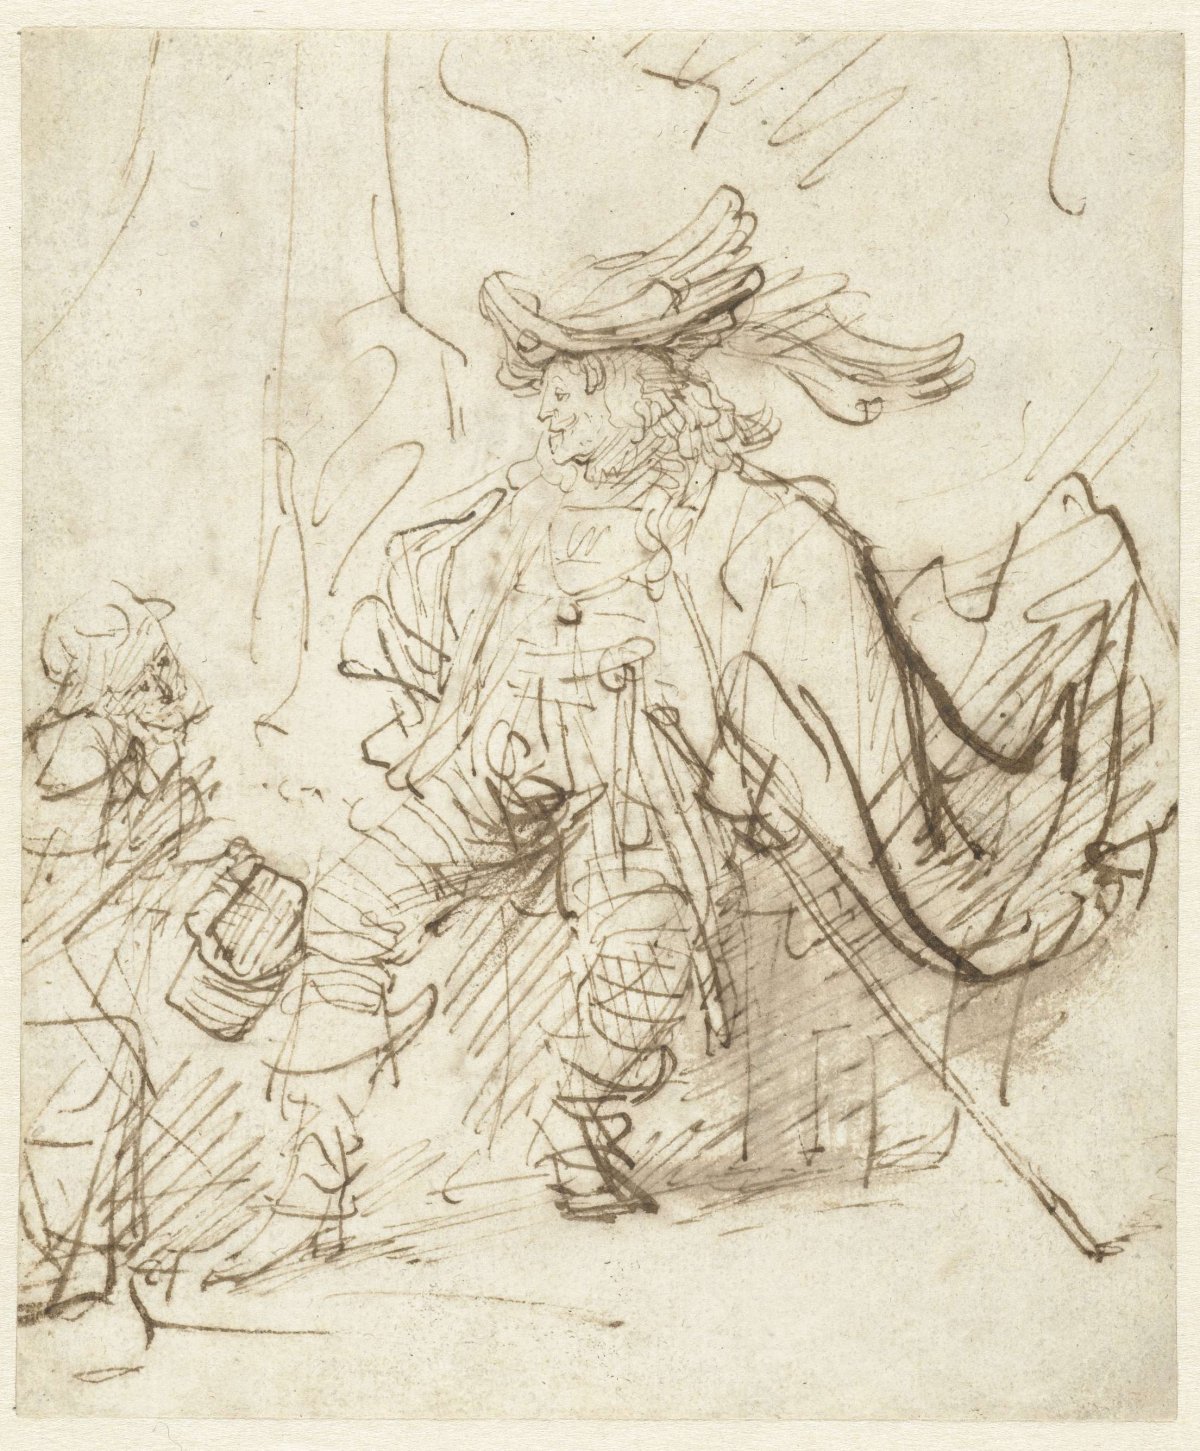 Seated Actor in the Role of Capitano, Rembrandt van Rijn, c. 1634 - c. 1636